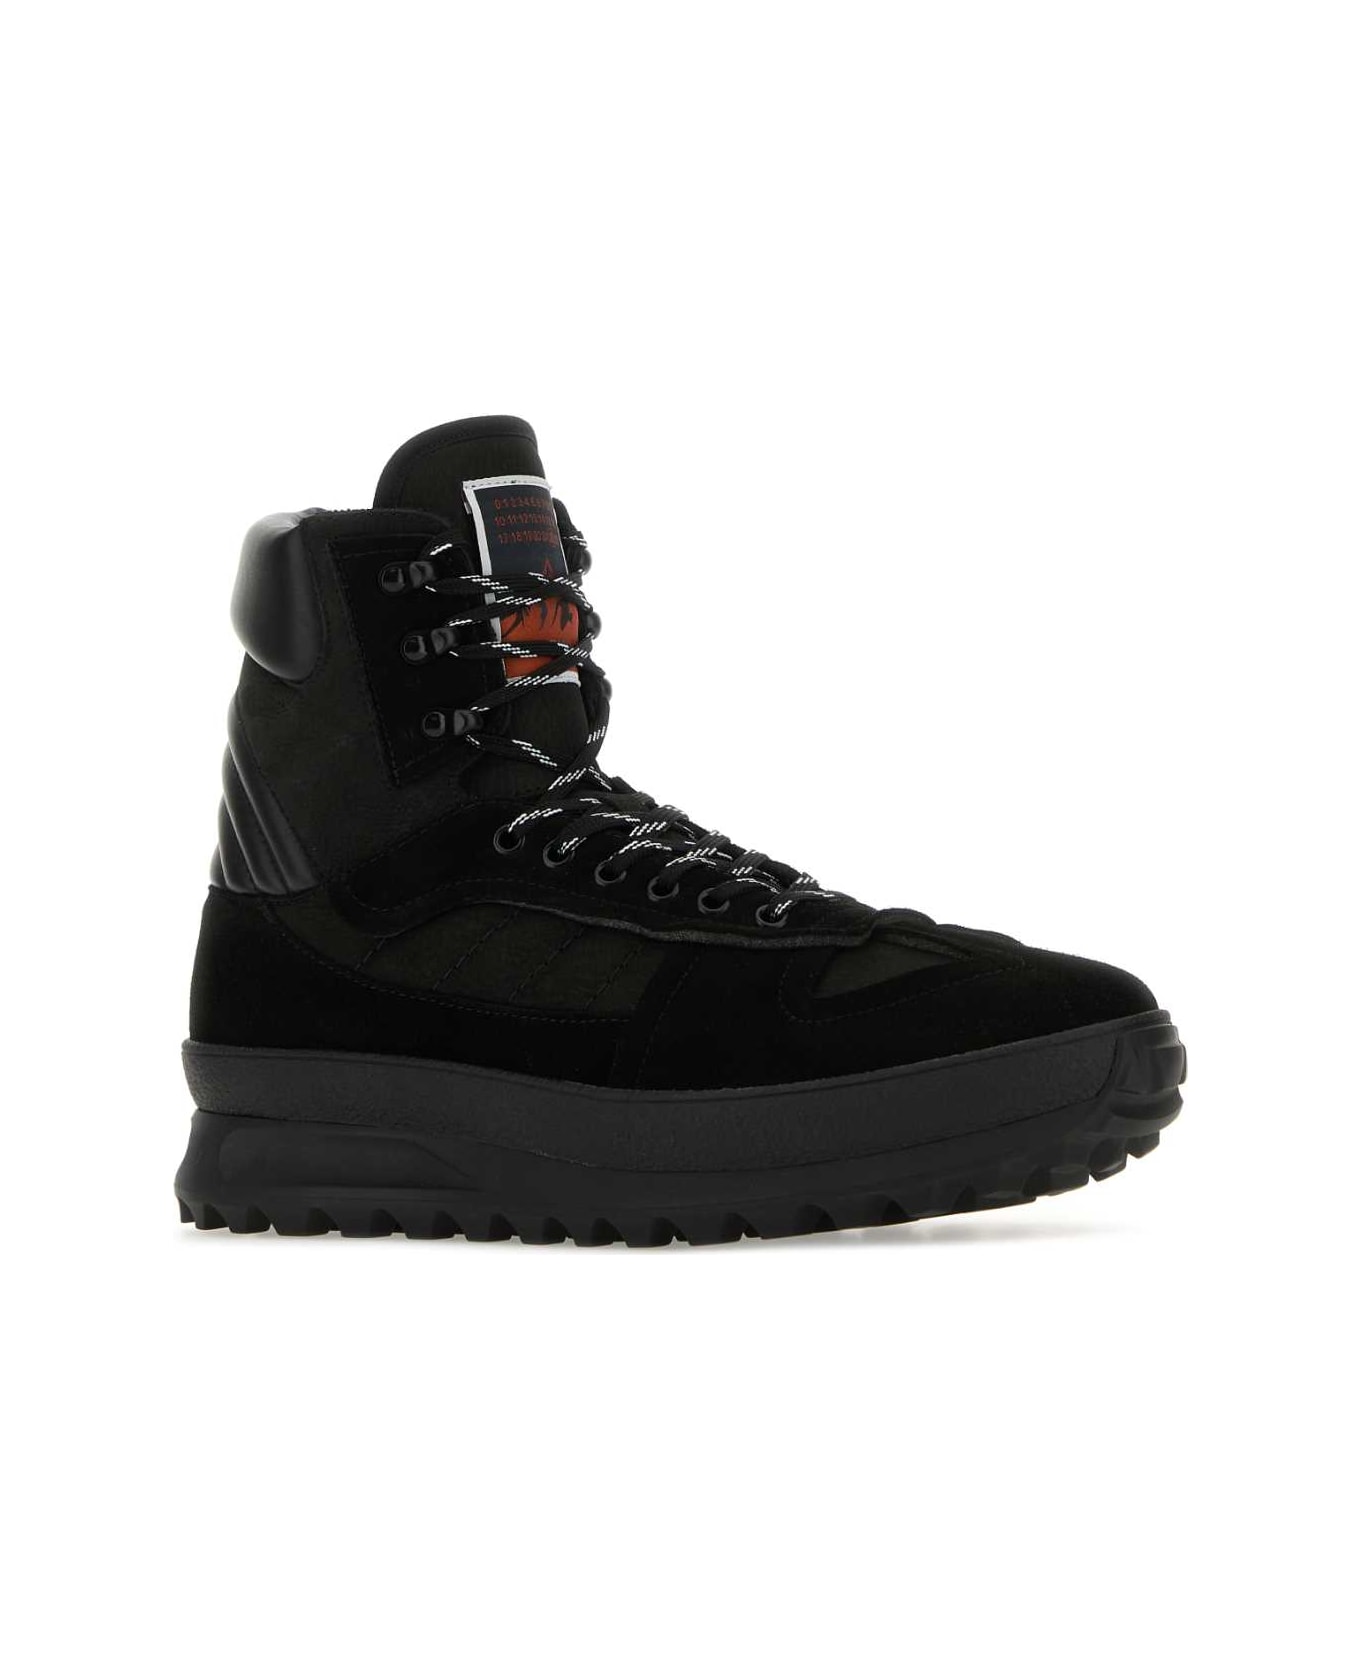 Maison Margiela Black Leather Climber Sneakers - BLACK